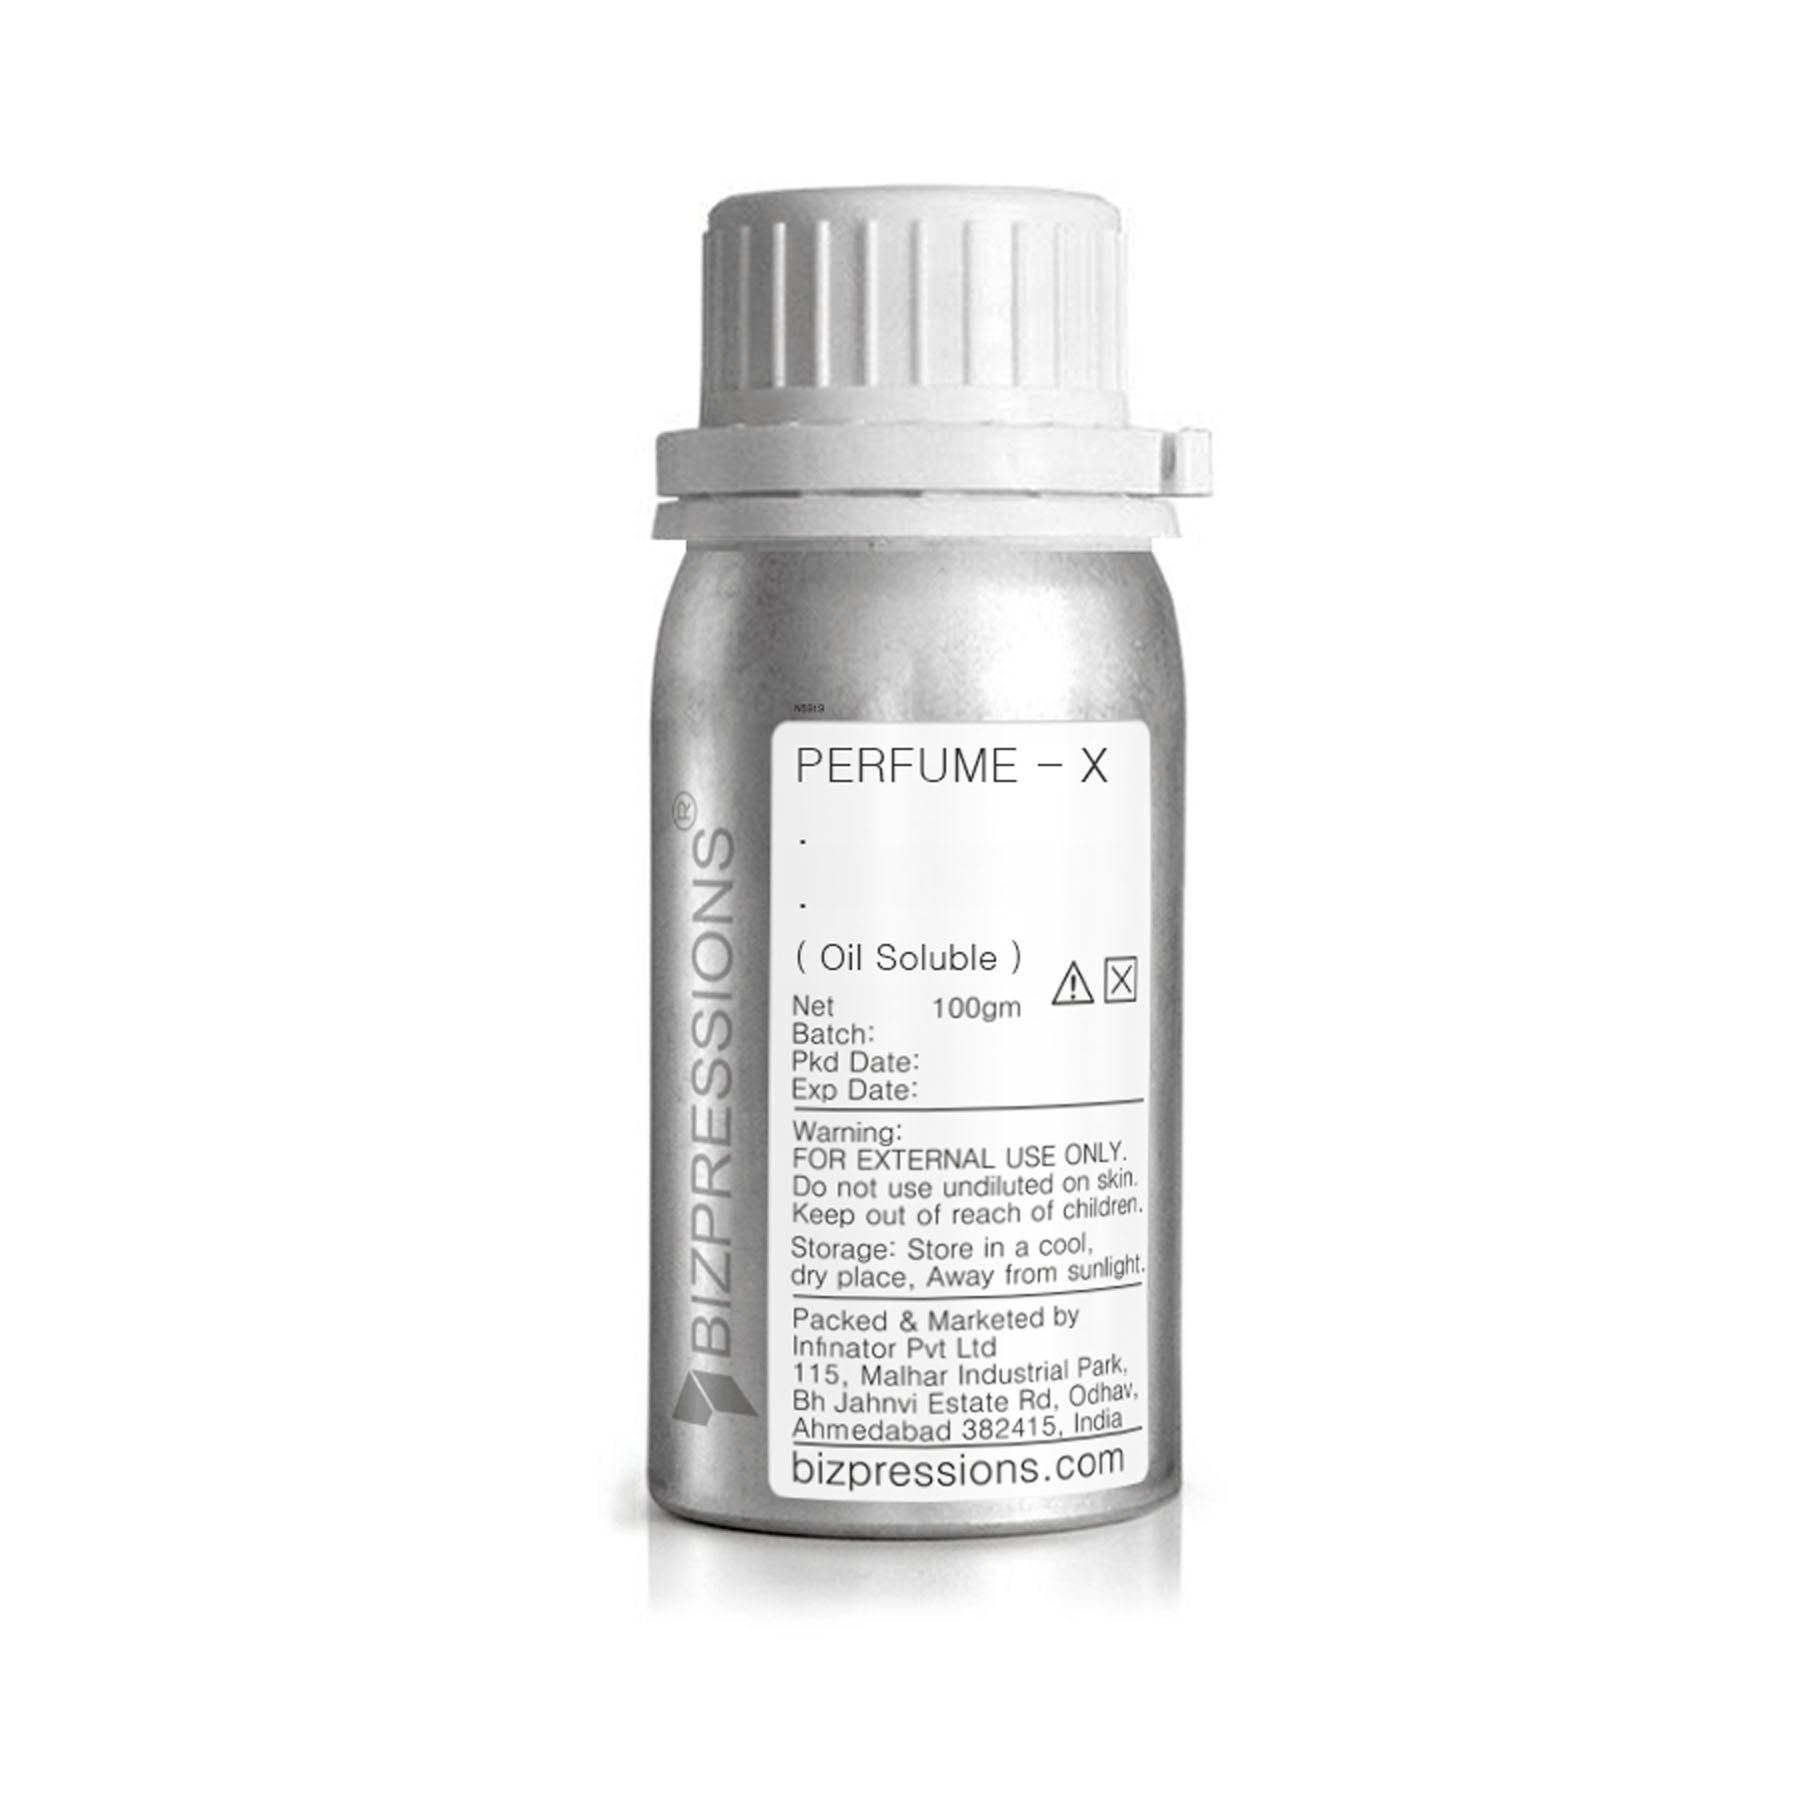 PERFUME - X - Fragrance ( Oil Soluble ) - 100 gm